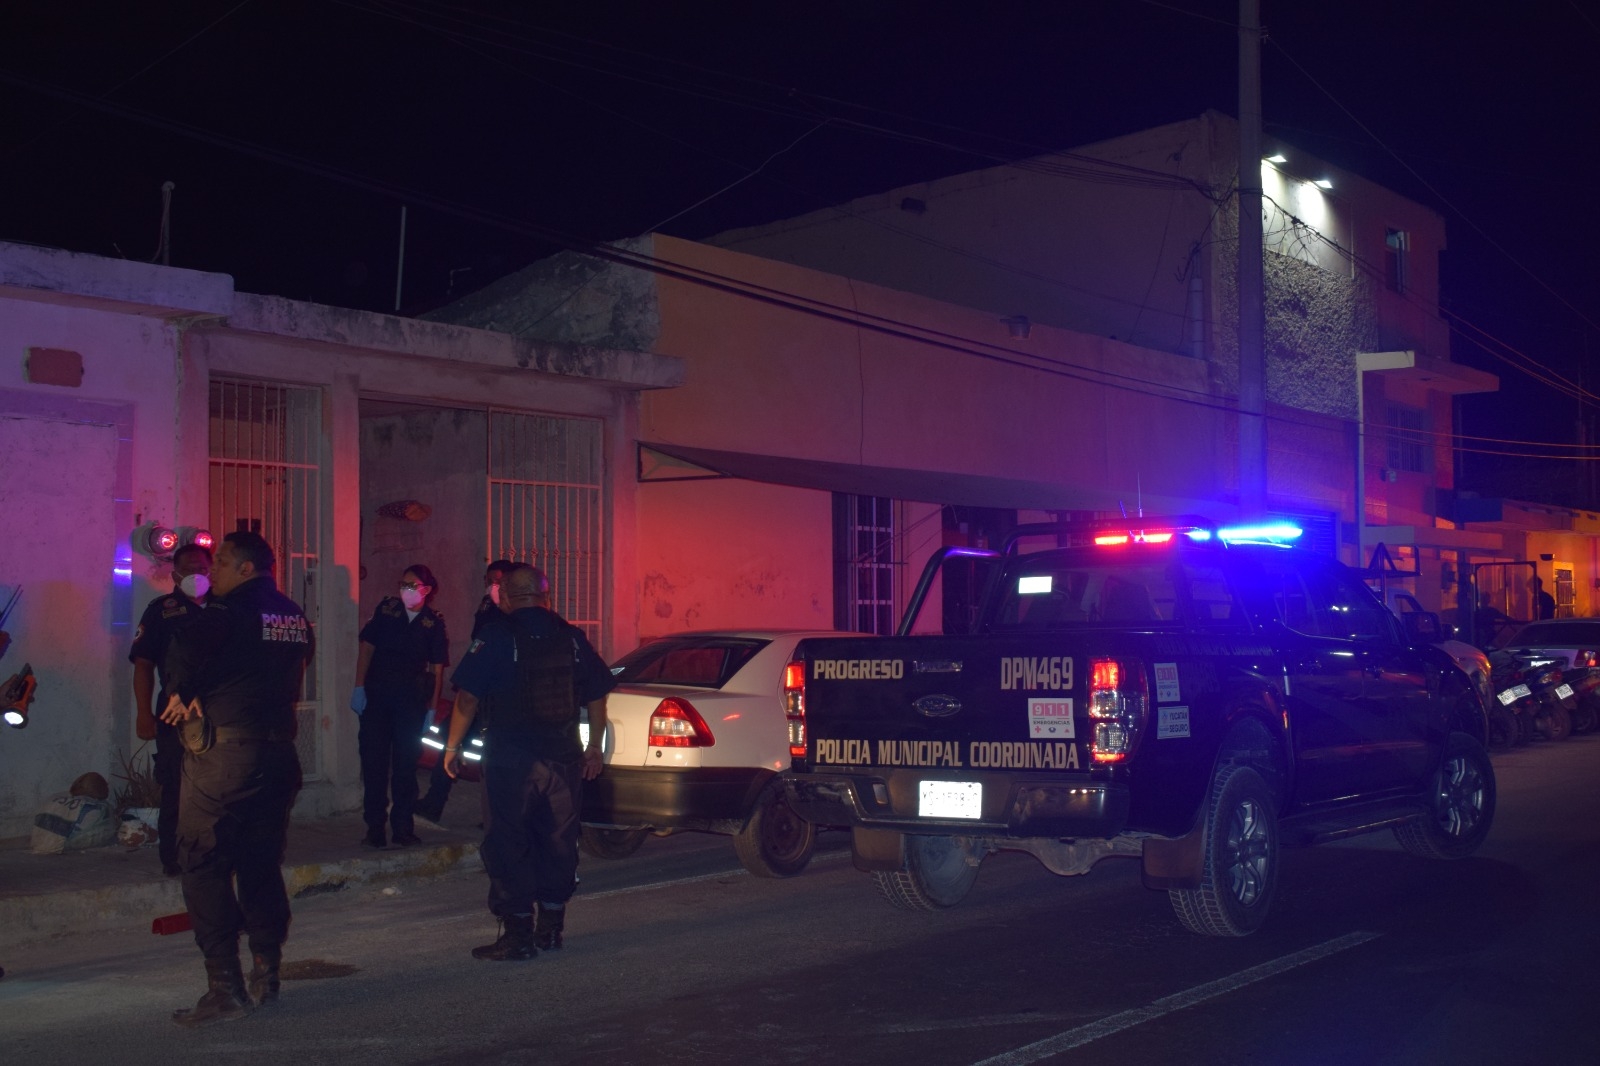 Hieren a policía municipal en Progreso con arma blanca